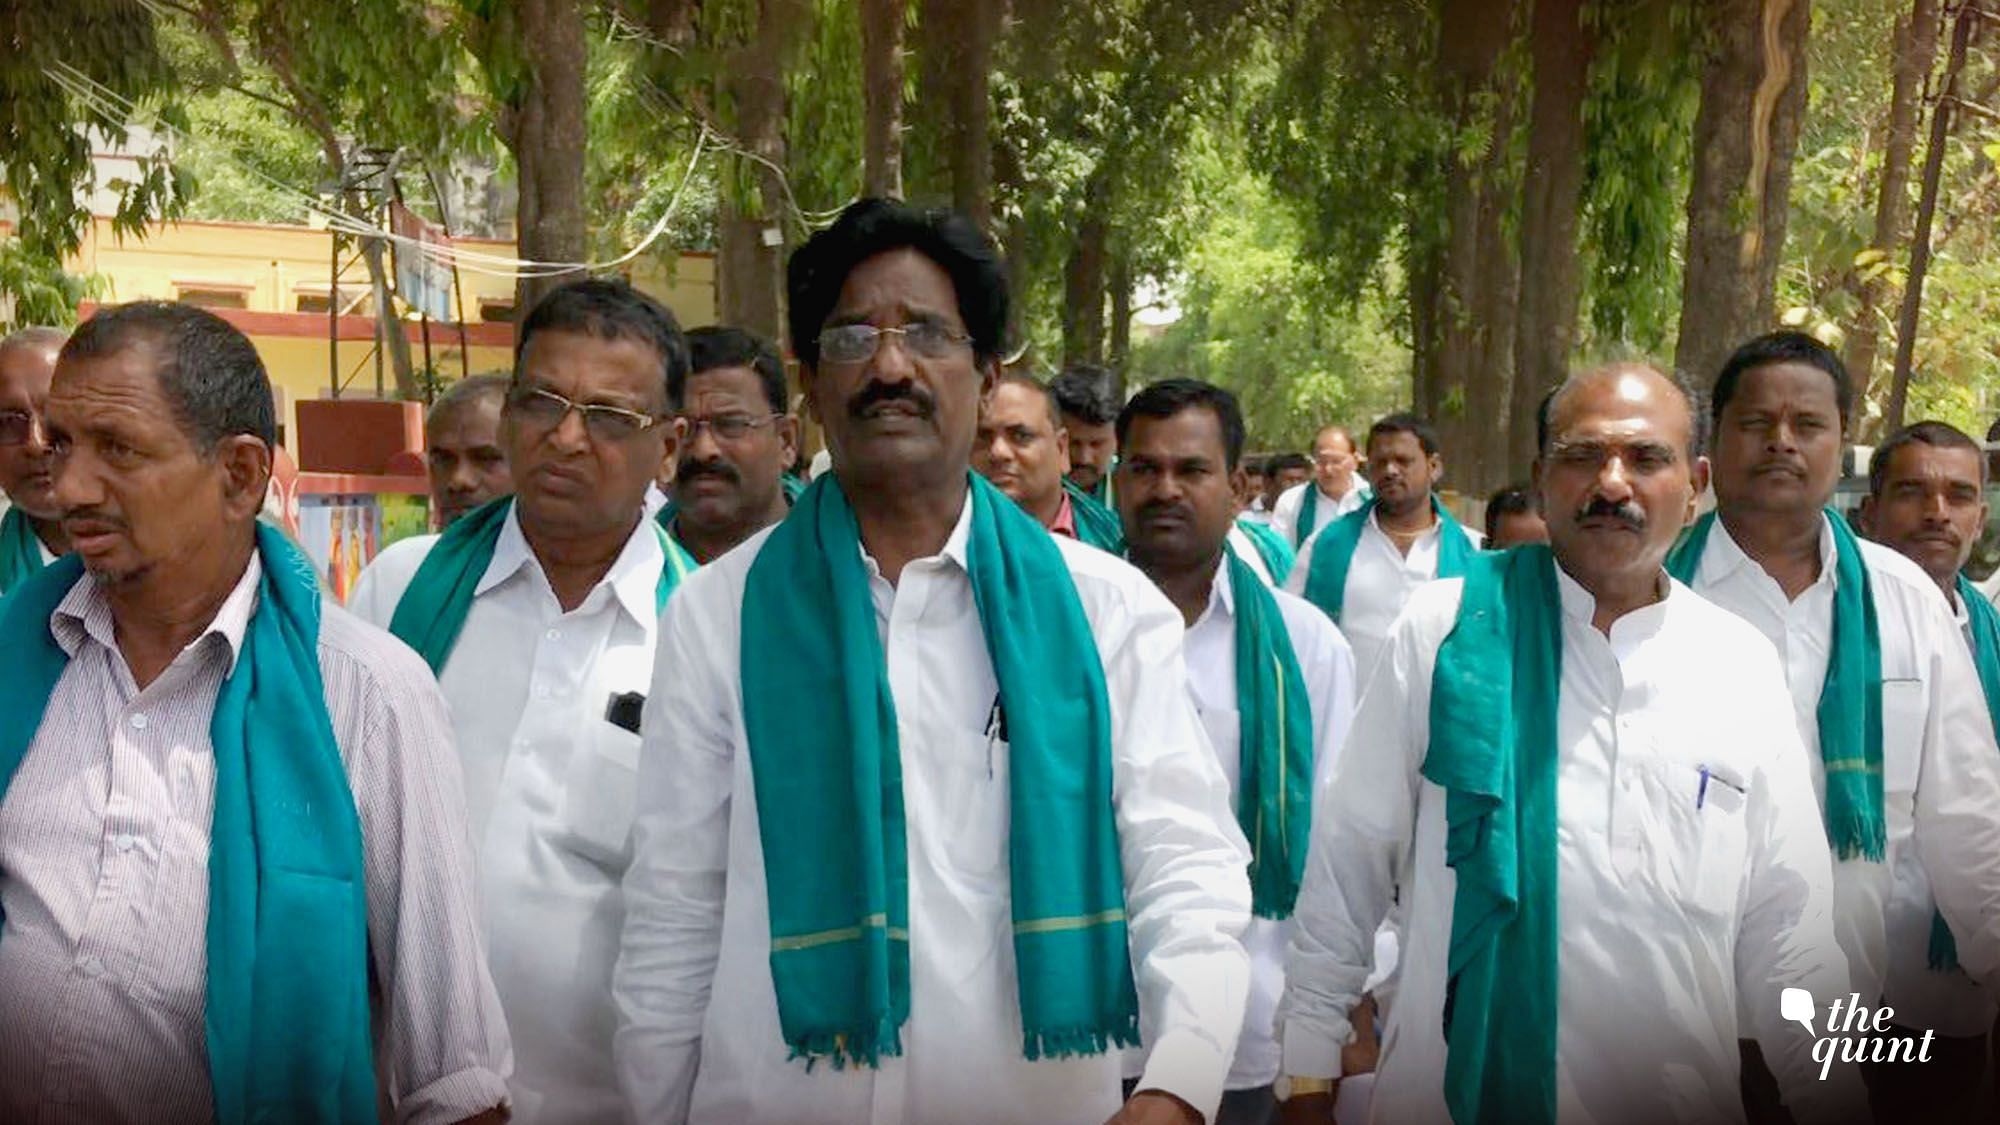 25 turmeric farmers from Telangana and Tamil Nadu will take on Prime Minister Modi from Varanasi.